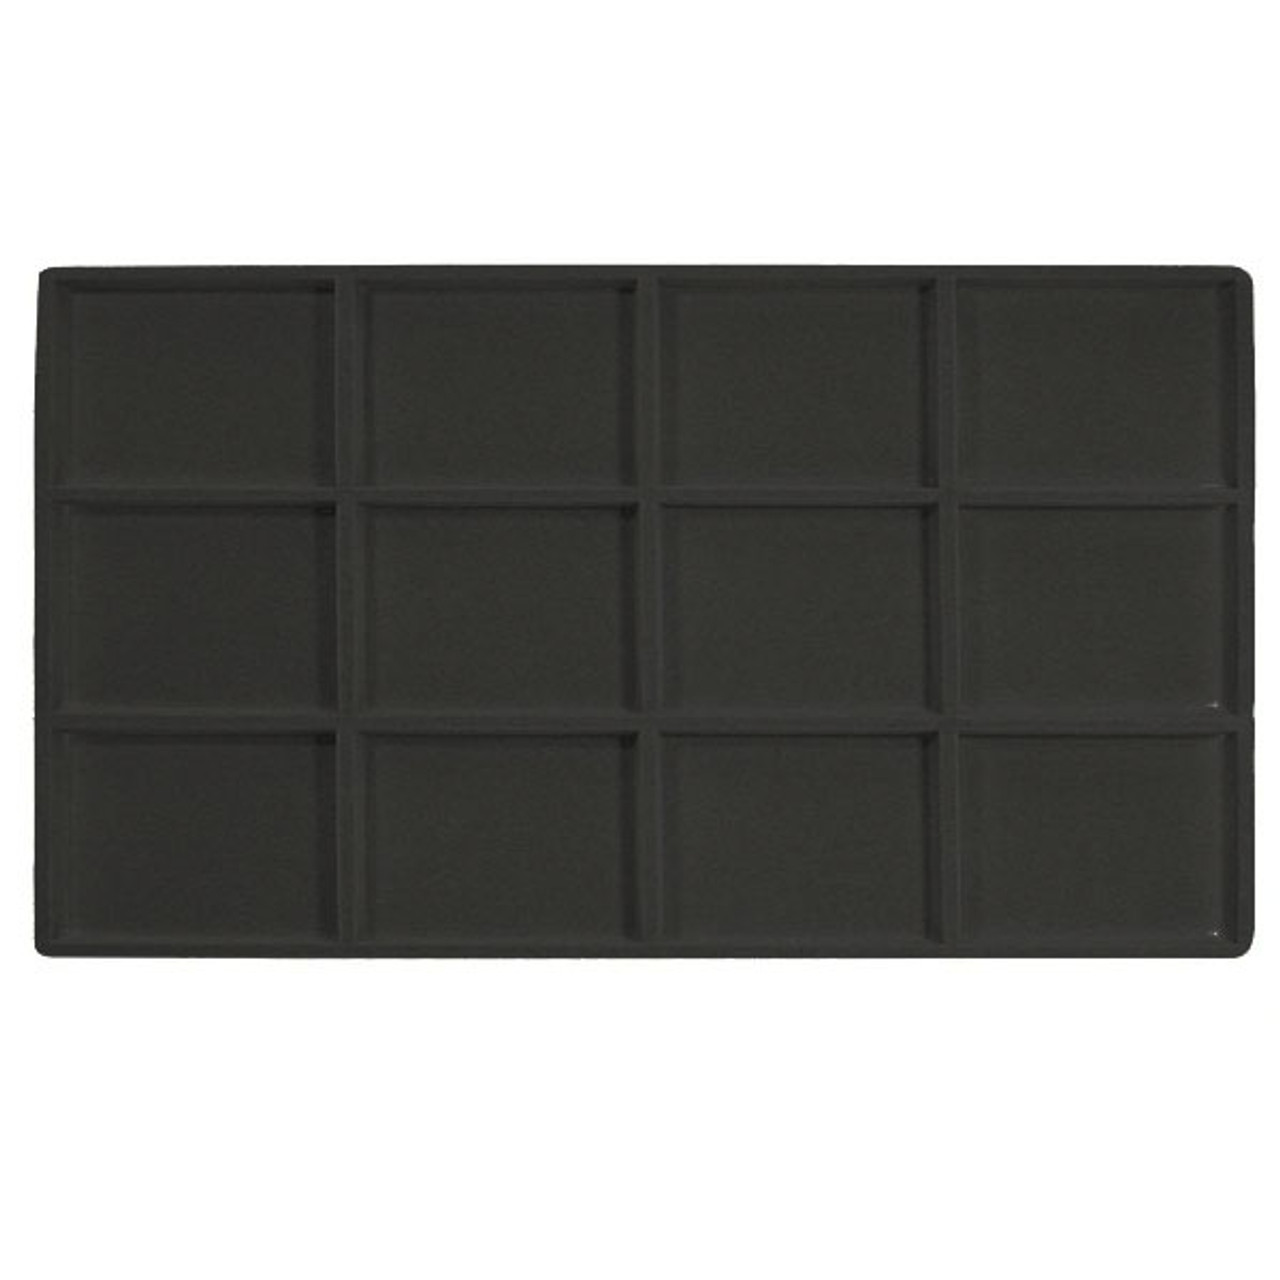 12 Pocket Black Insert - 14"-1/8" x 7-5/8" fits in Large jewellery trays